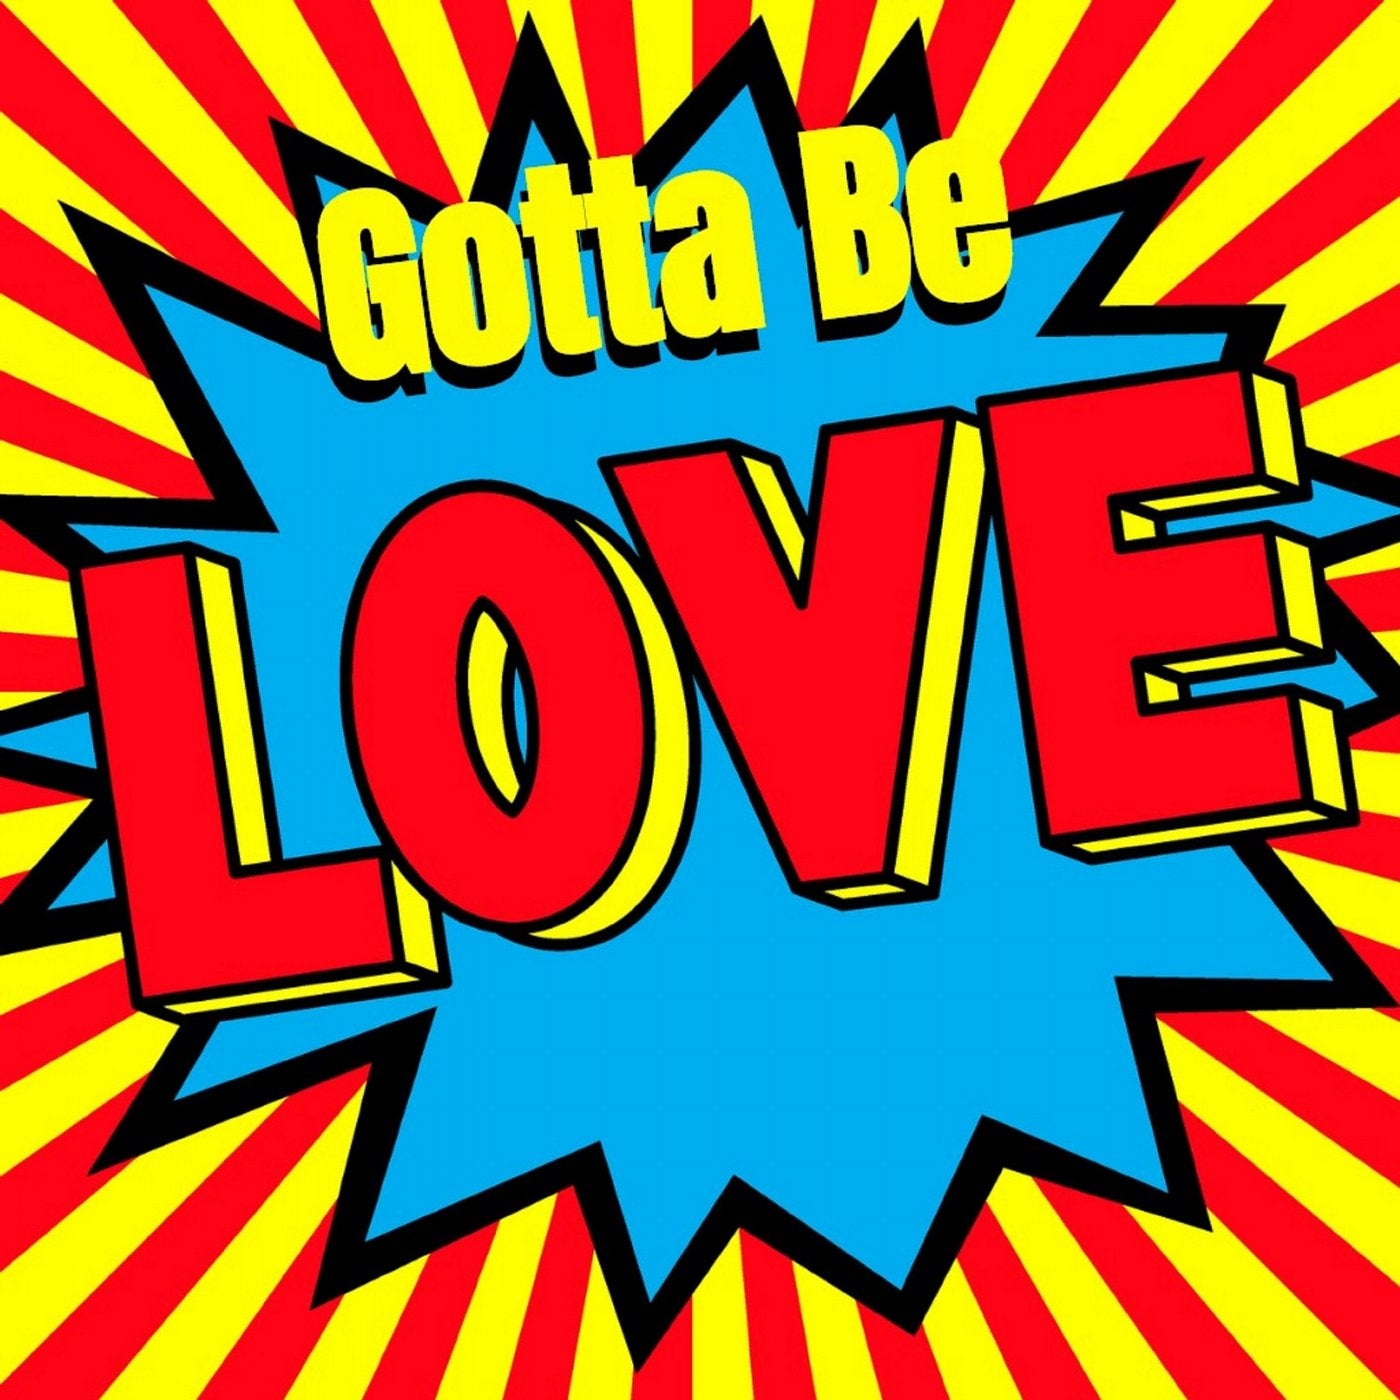 Gotta Be Love (Radio Edit)